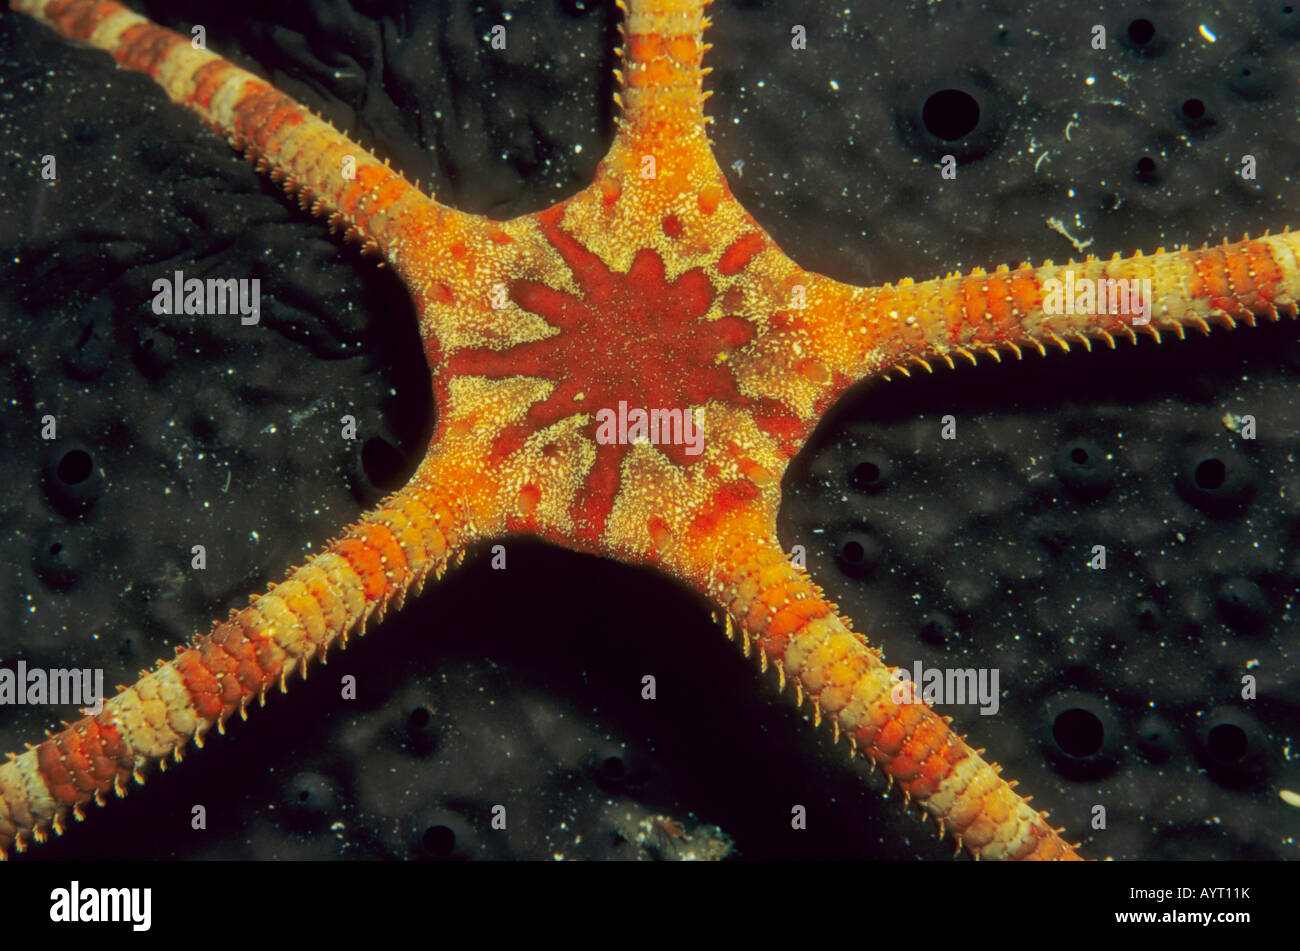 Ruby Brittle Star (Ophioderma rubicundum) on a sea sponge, Mediterranean Sea Stock Photo